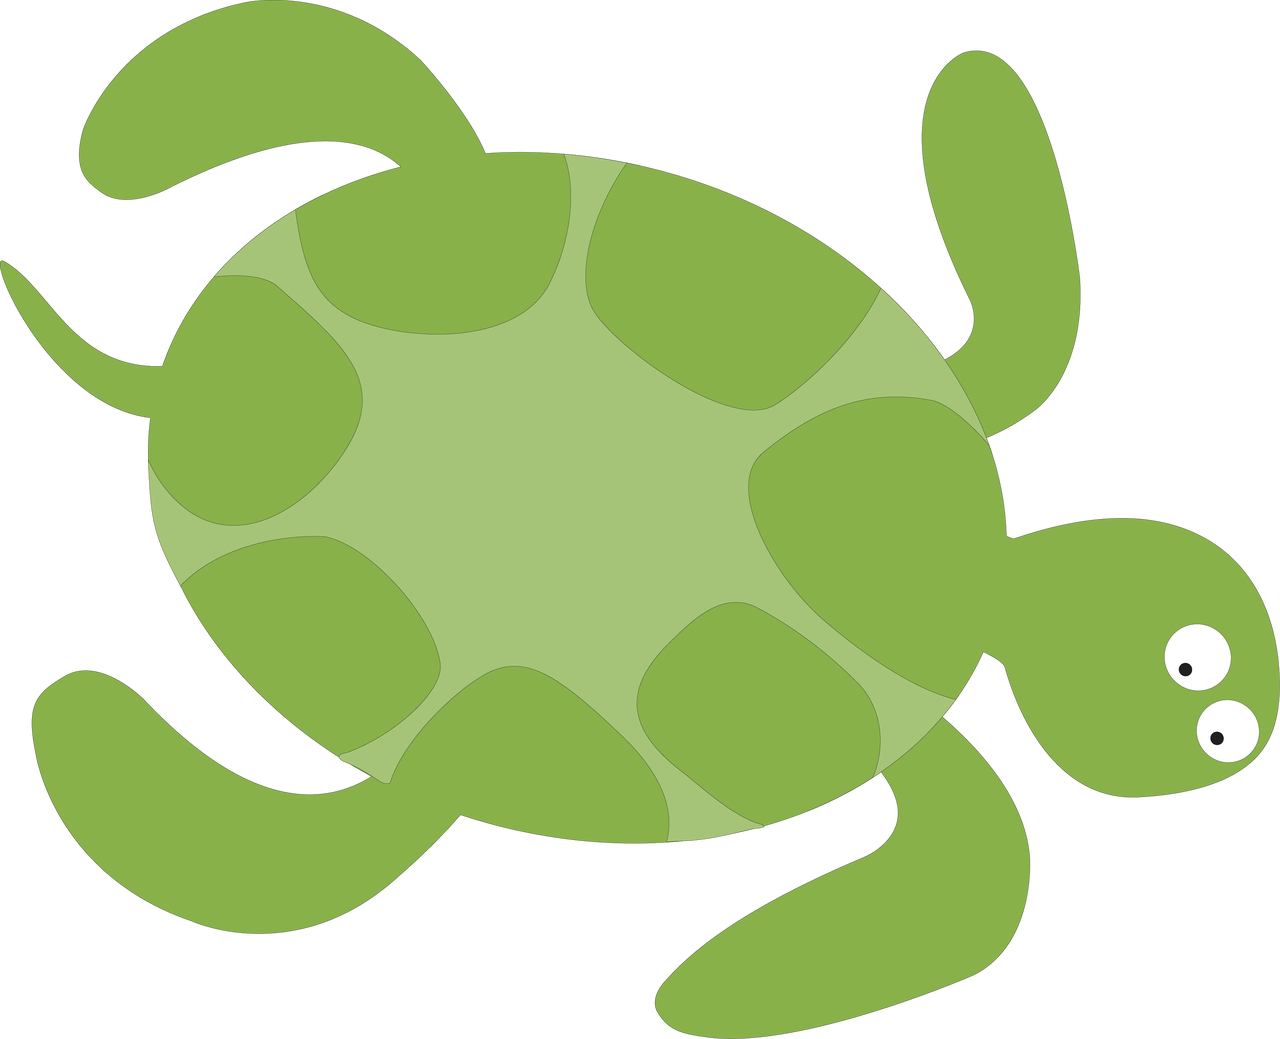 Turtle SVG Cut File